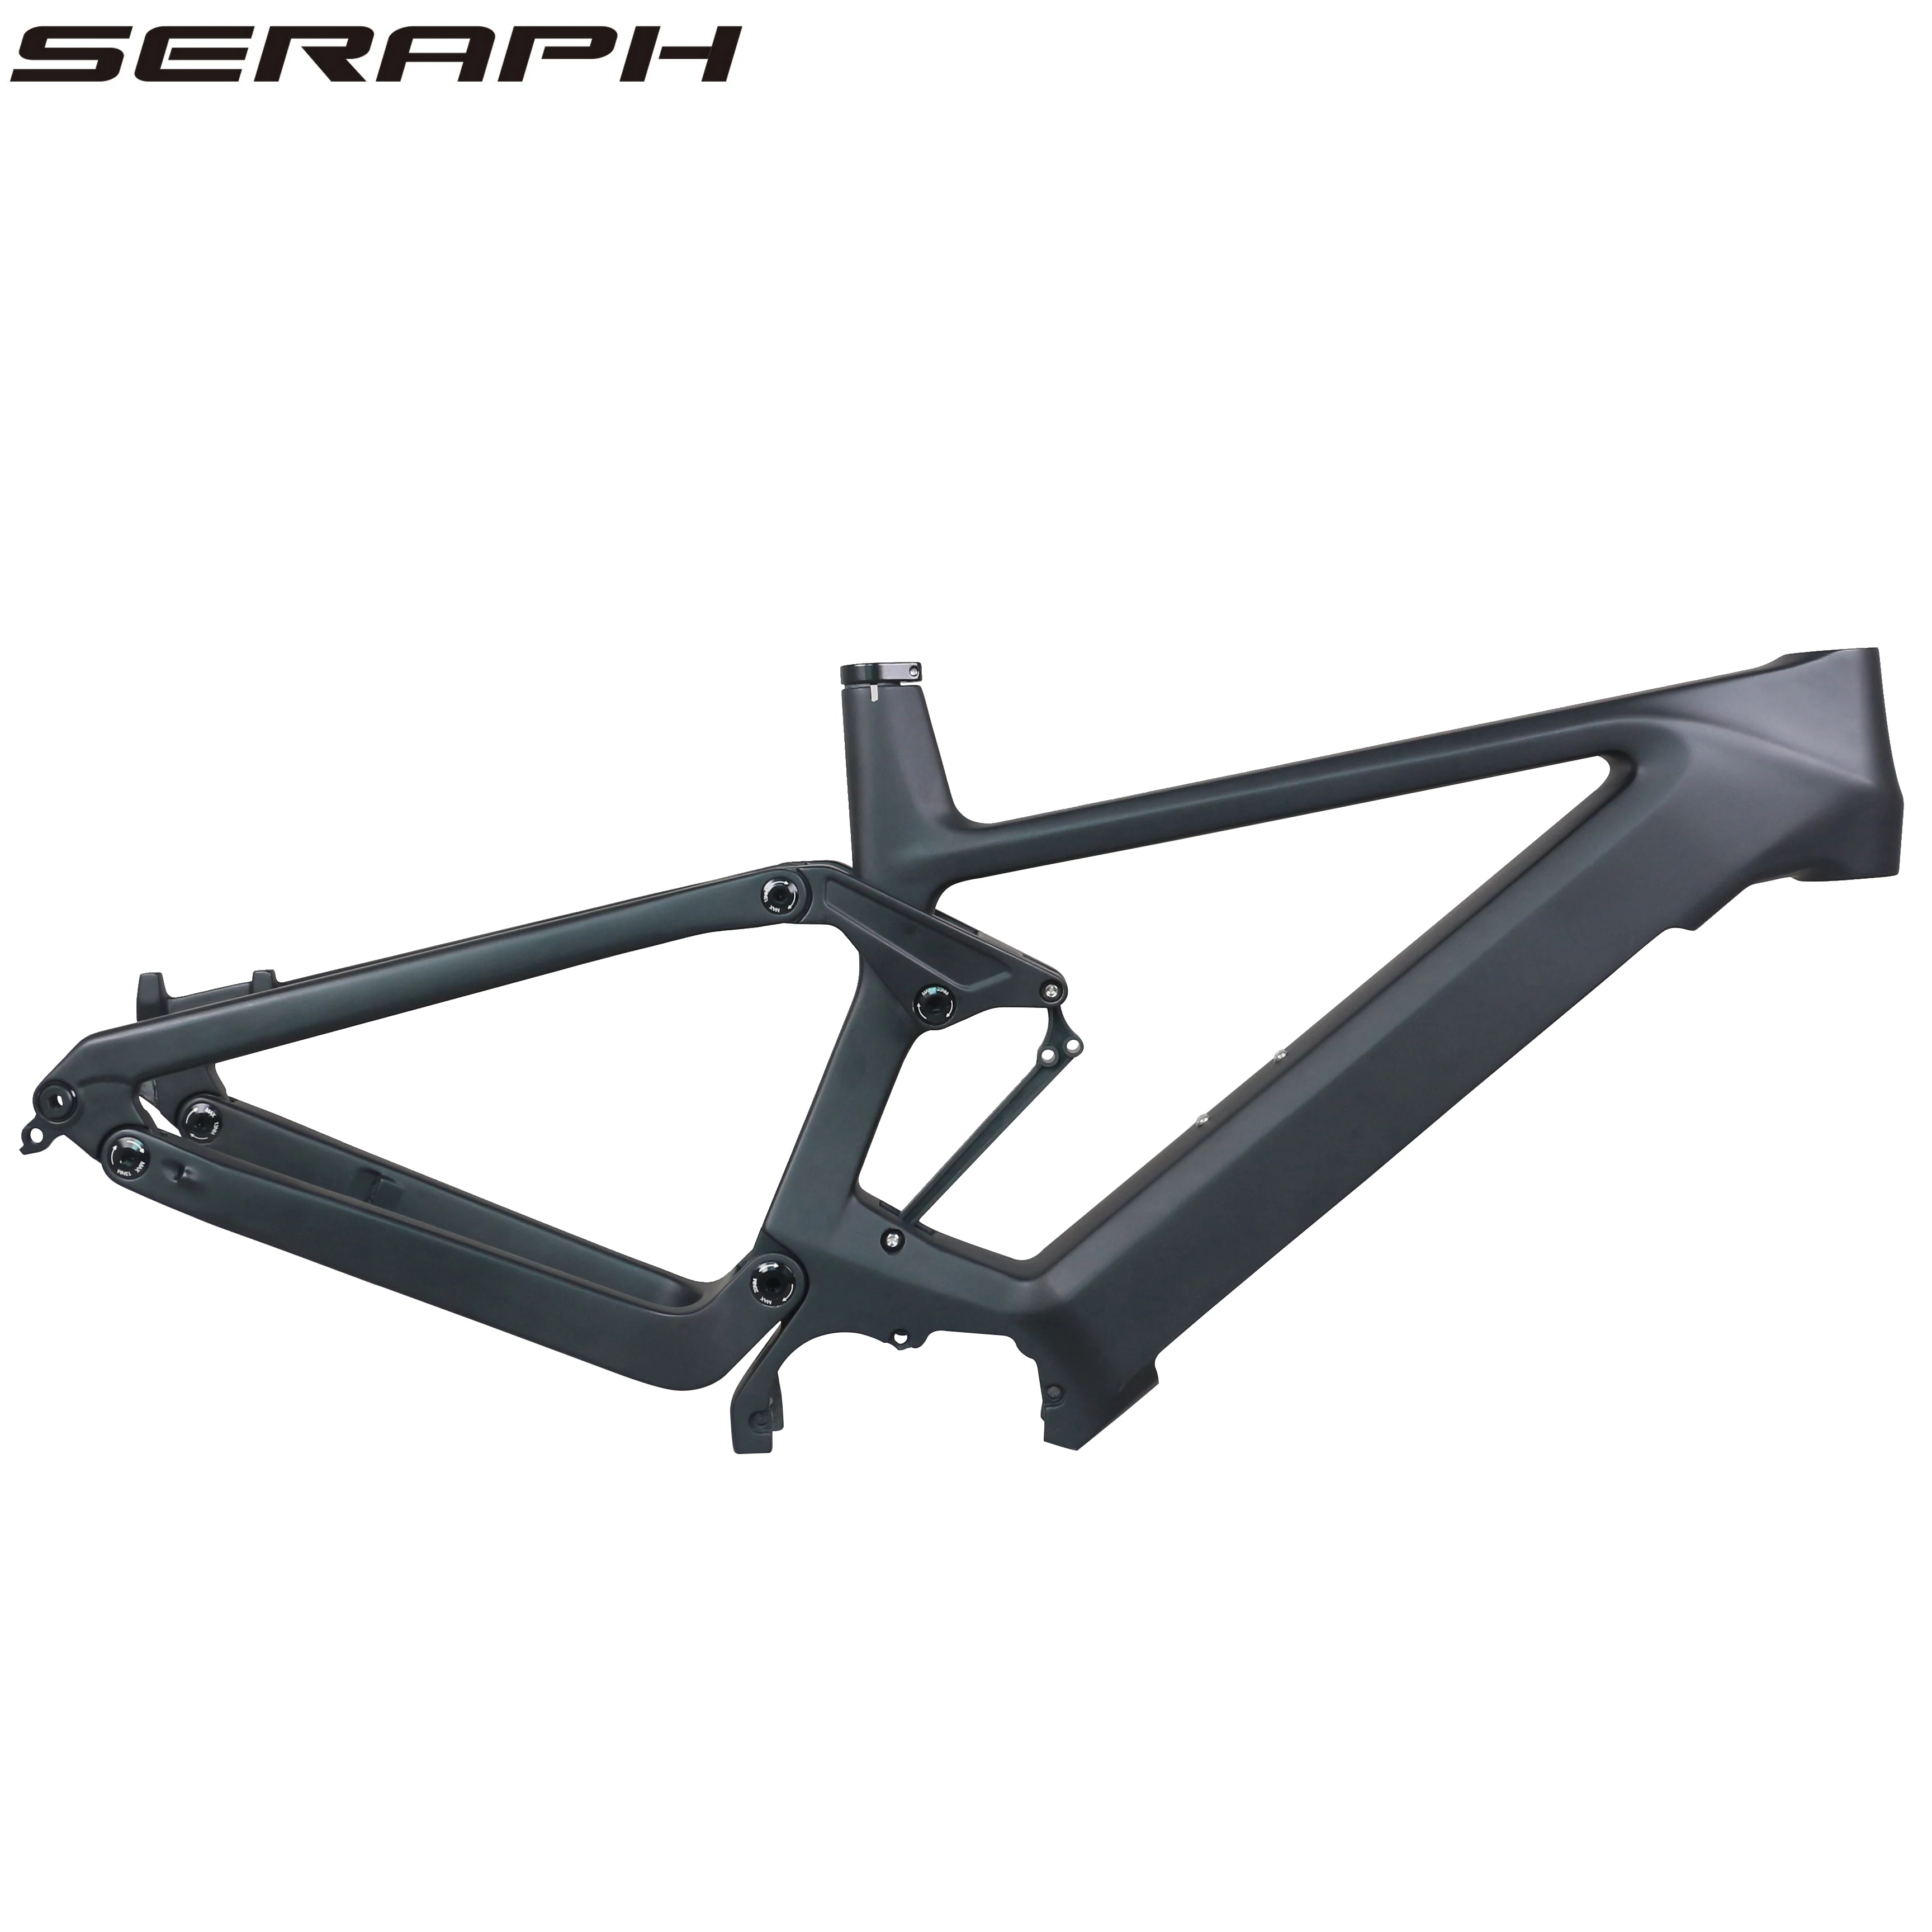 

E-MTB Bike Carbon Frame, 29er Suspension frame, Compatible with Bafang M510, M500, M600 Mid Motor, 250W, Motor and Battery